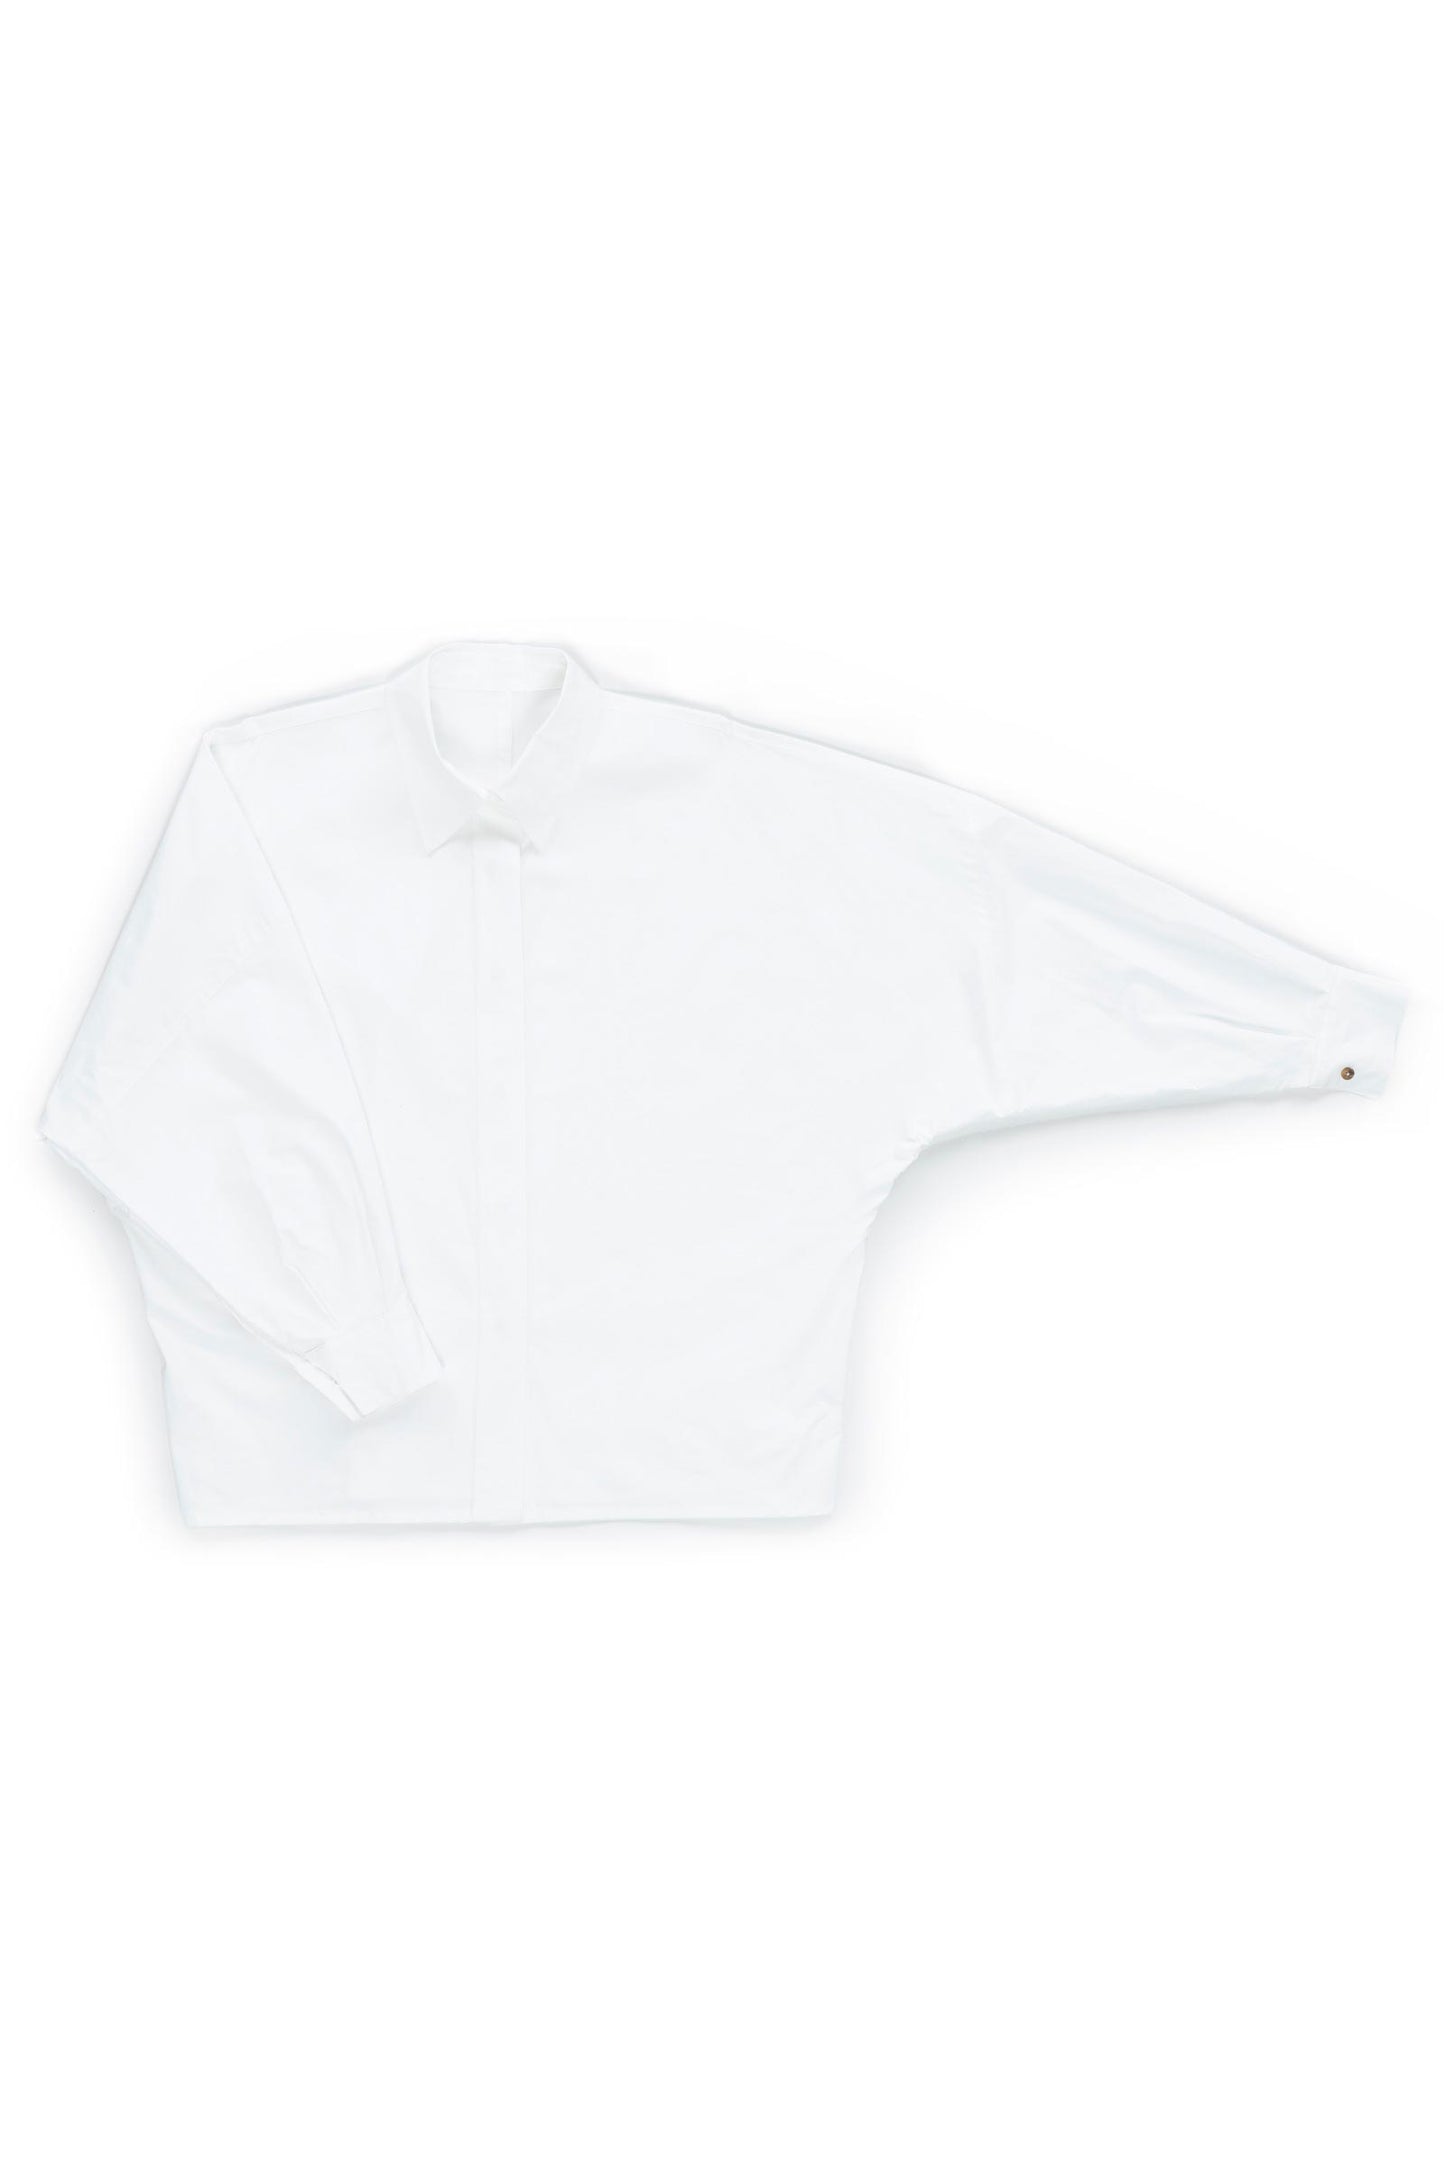 Cotton white shirt